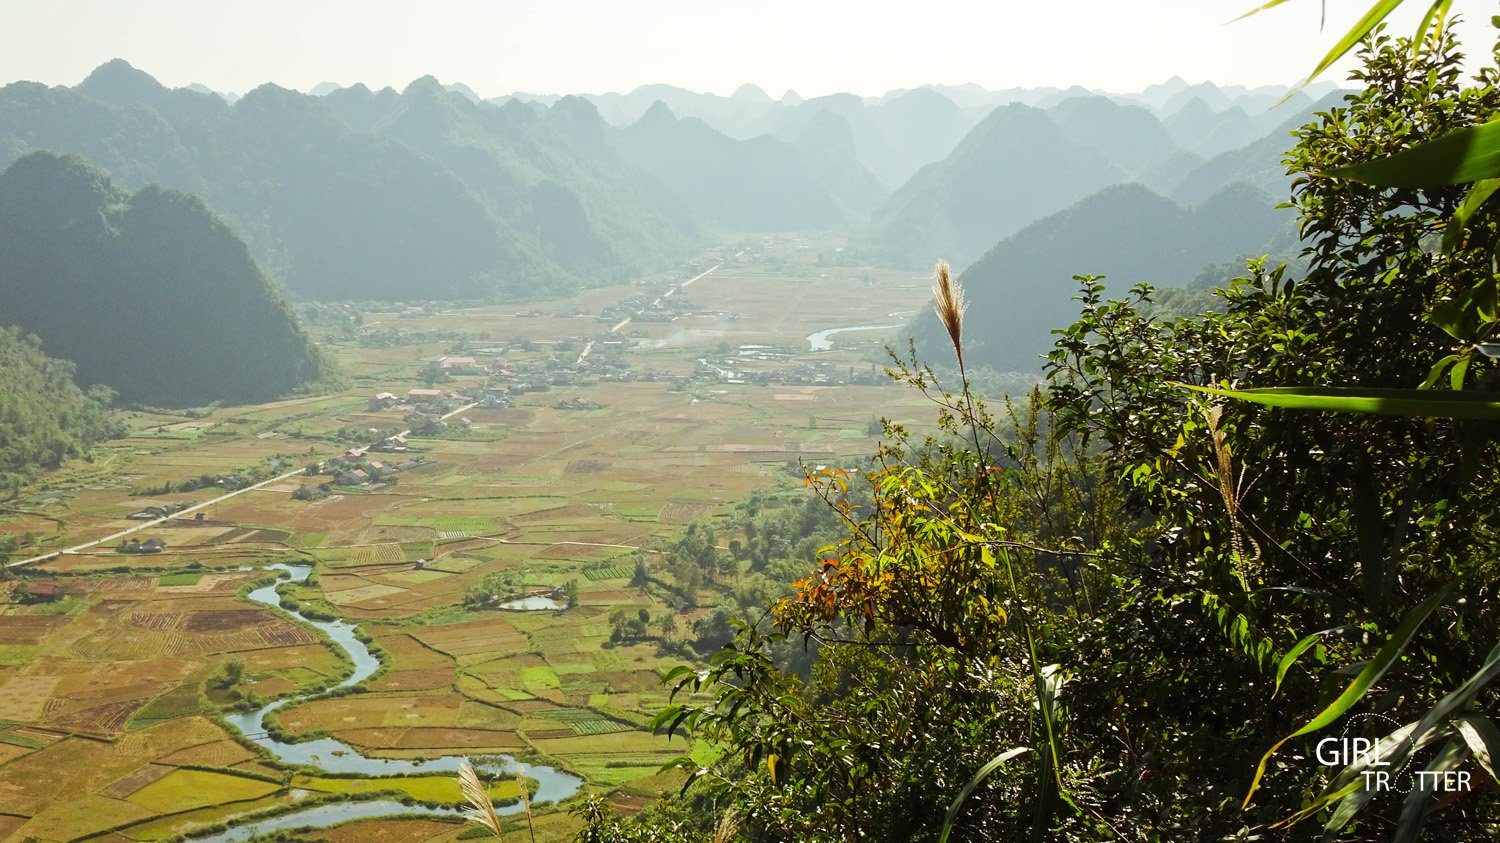 Quhyn Son Vallée Vietnam